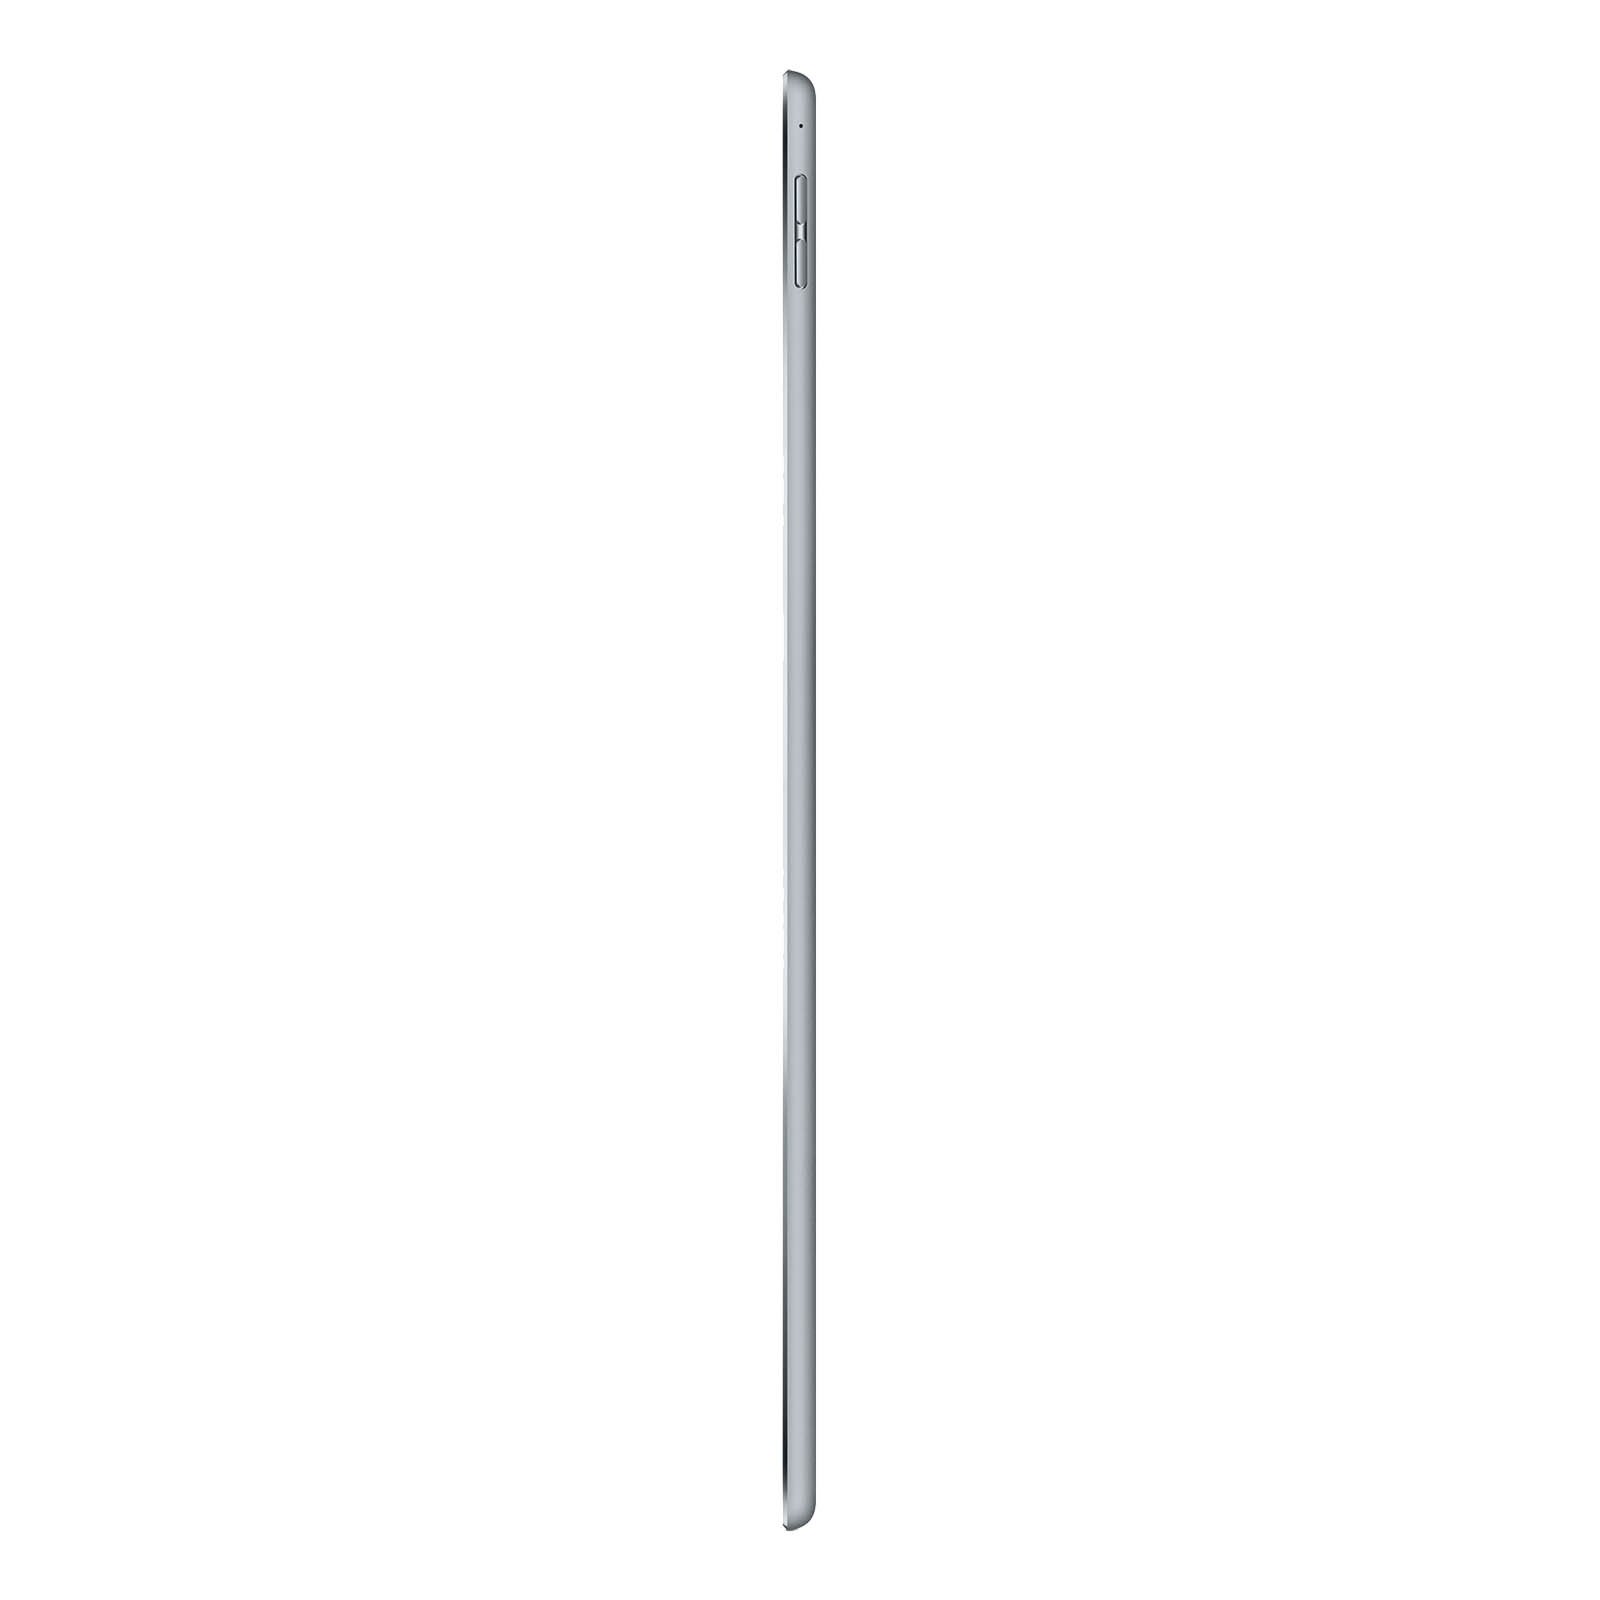 iPad Pro 12.9 Inch 1st Gen 256GB Space Grey Pristine - Unlocked